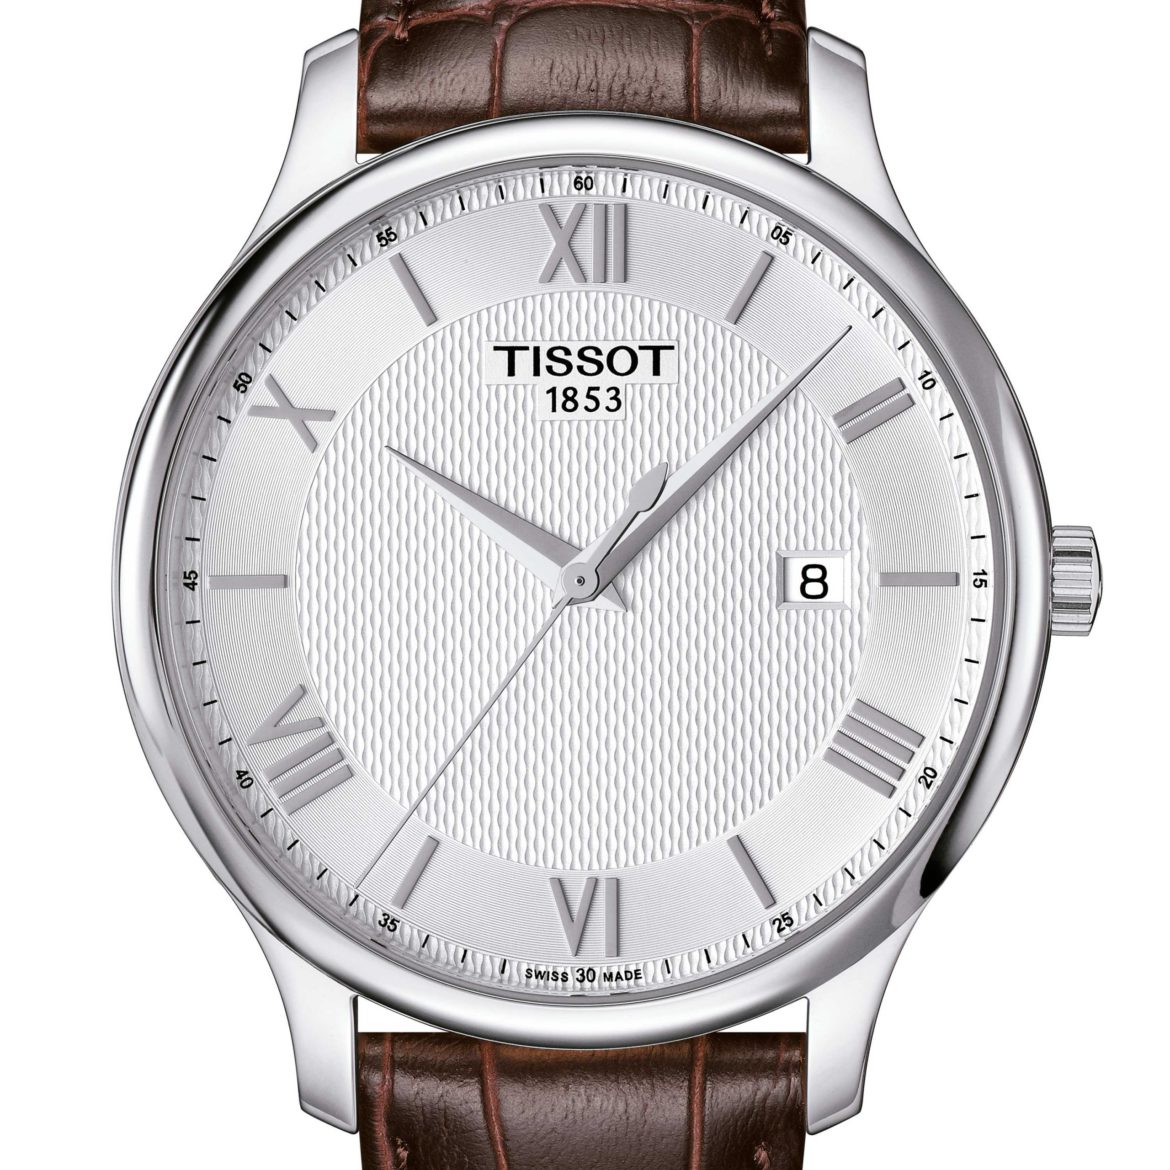 TISSOT</br>Tissot Tradition</br>T0636101603800